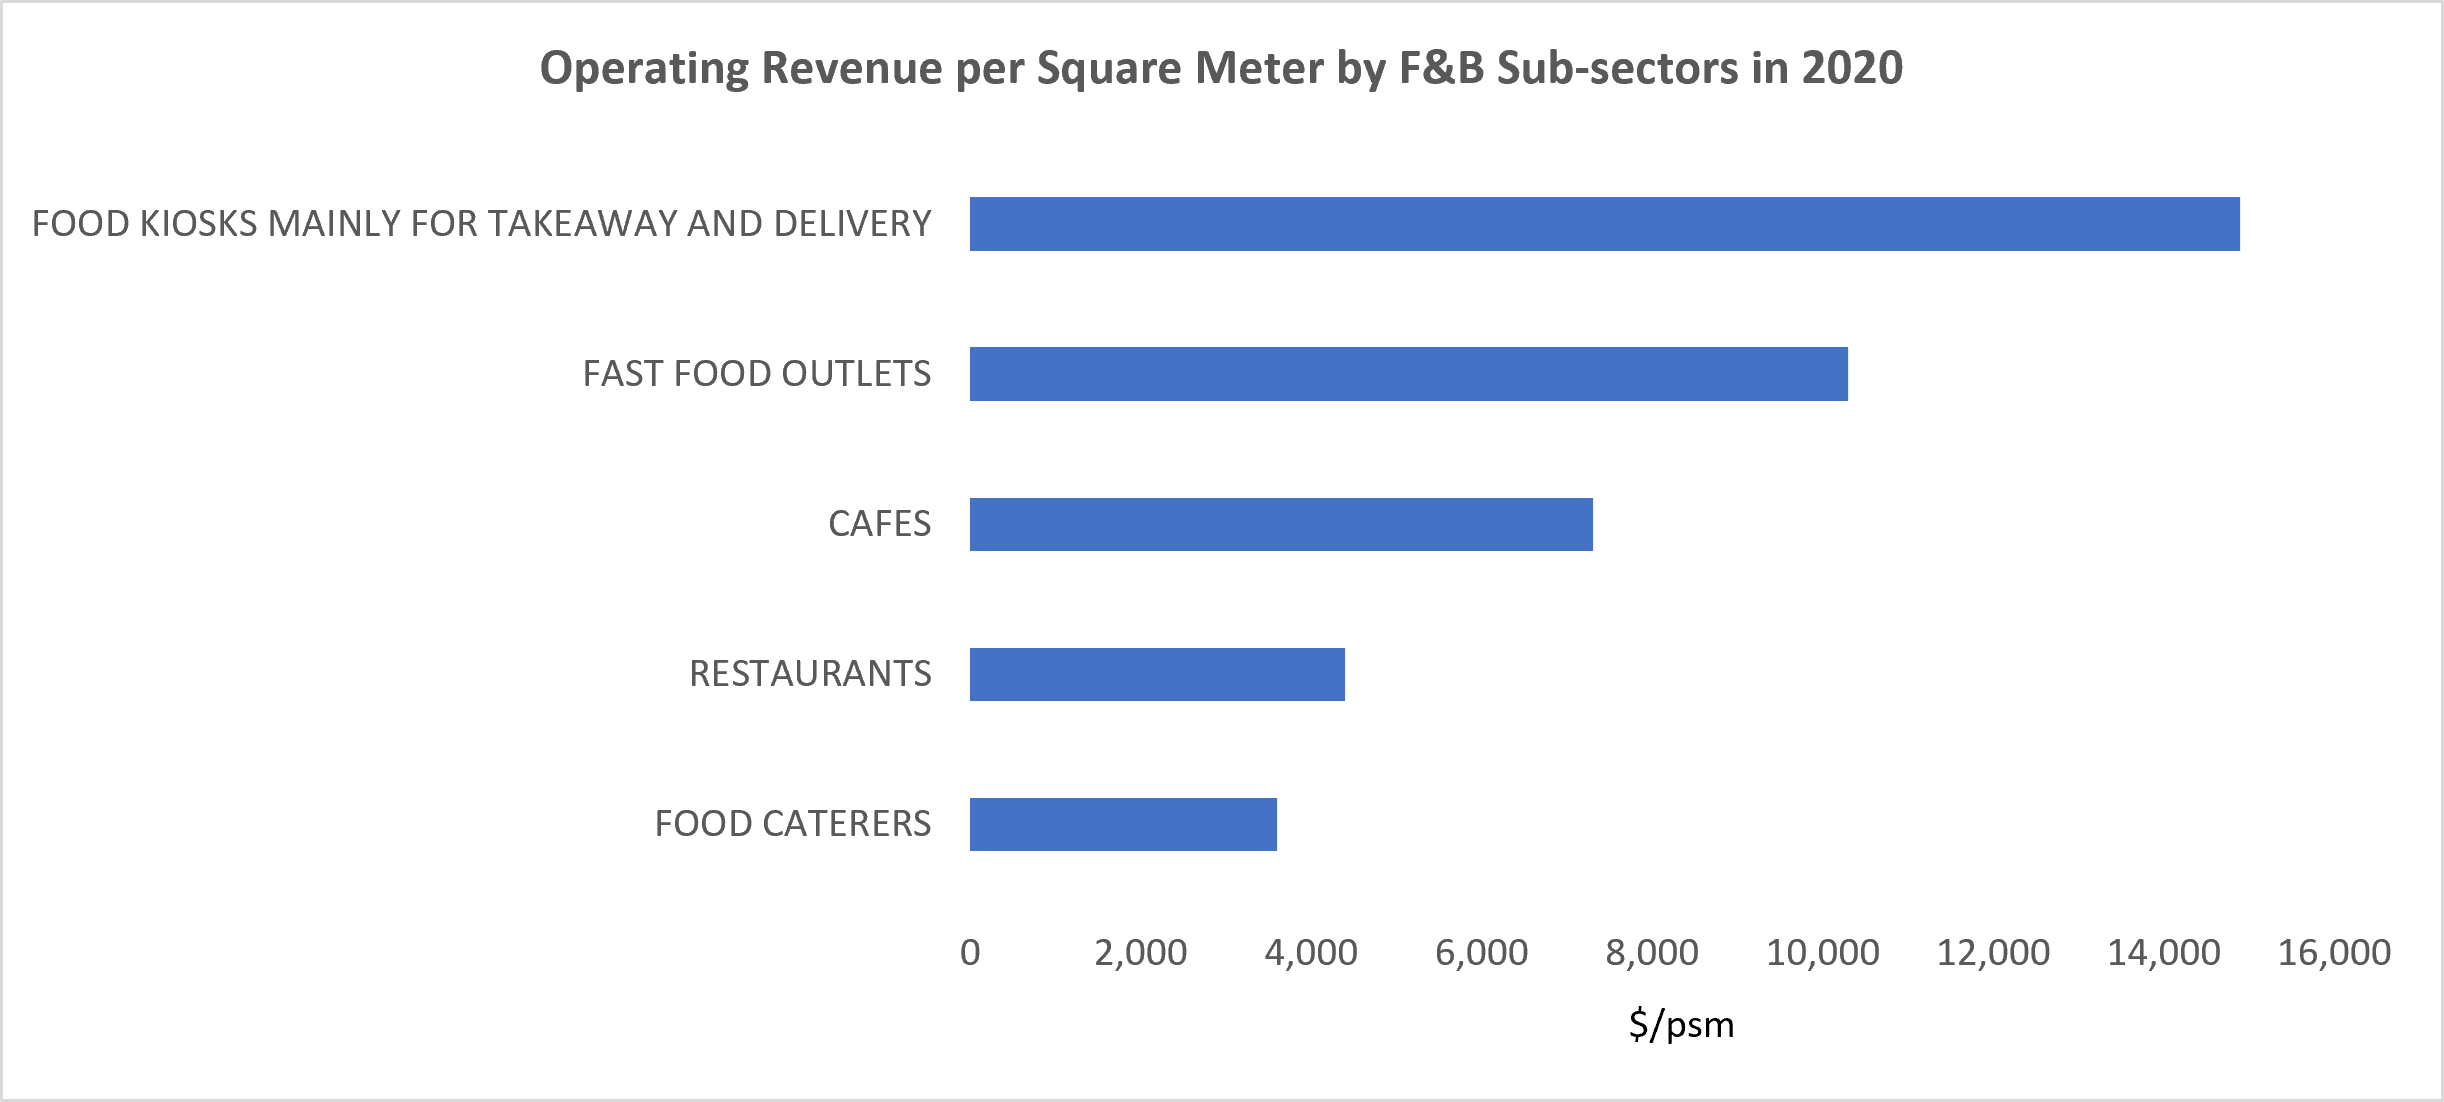 Operating revenue per square metre for F&B businesses in 2020